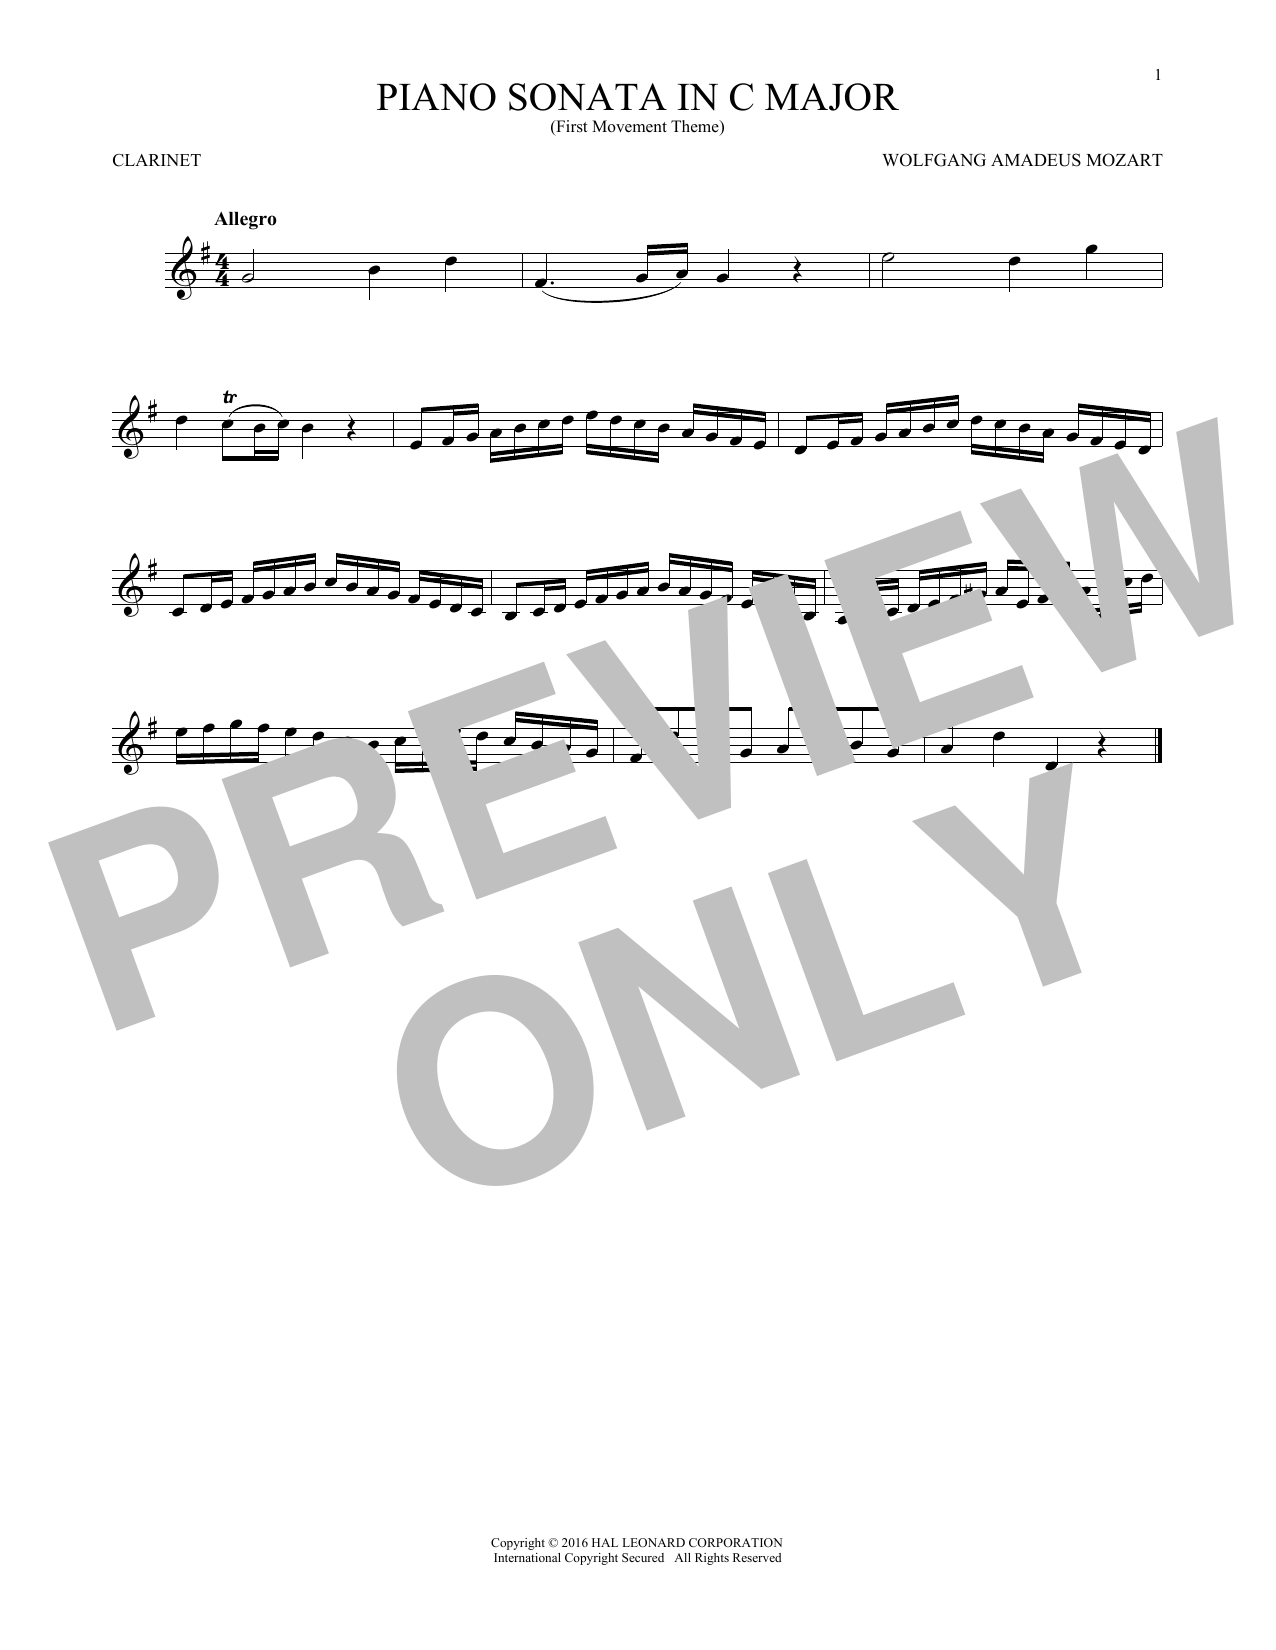 Wolfgang Amadeus Mozart Piano Sonata In C Major Sheet Music Notes & Chords for Alto Saxophone - Download or Print PDF